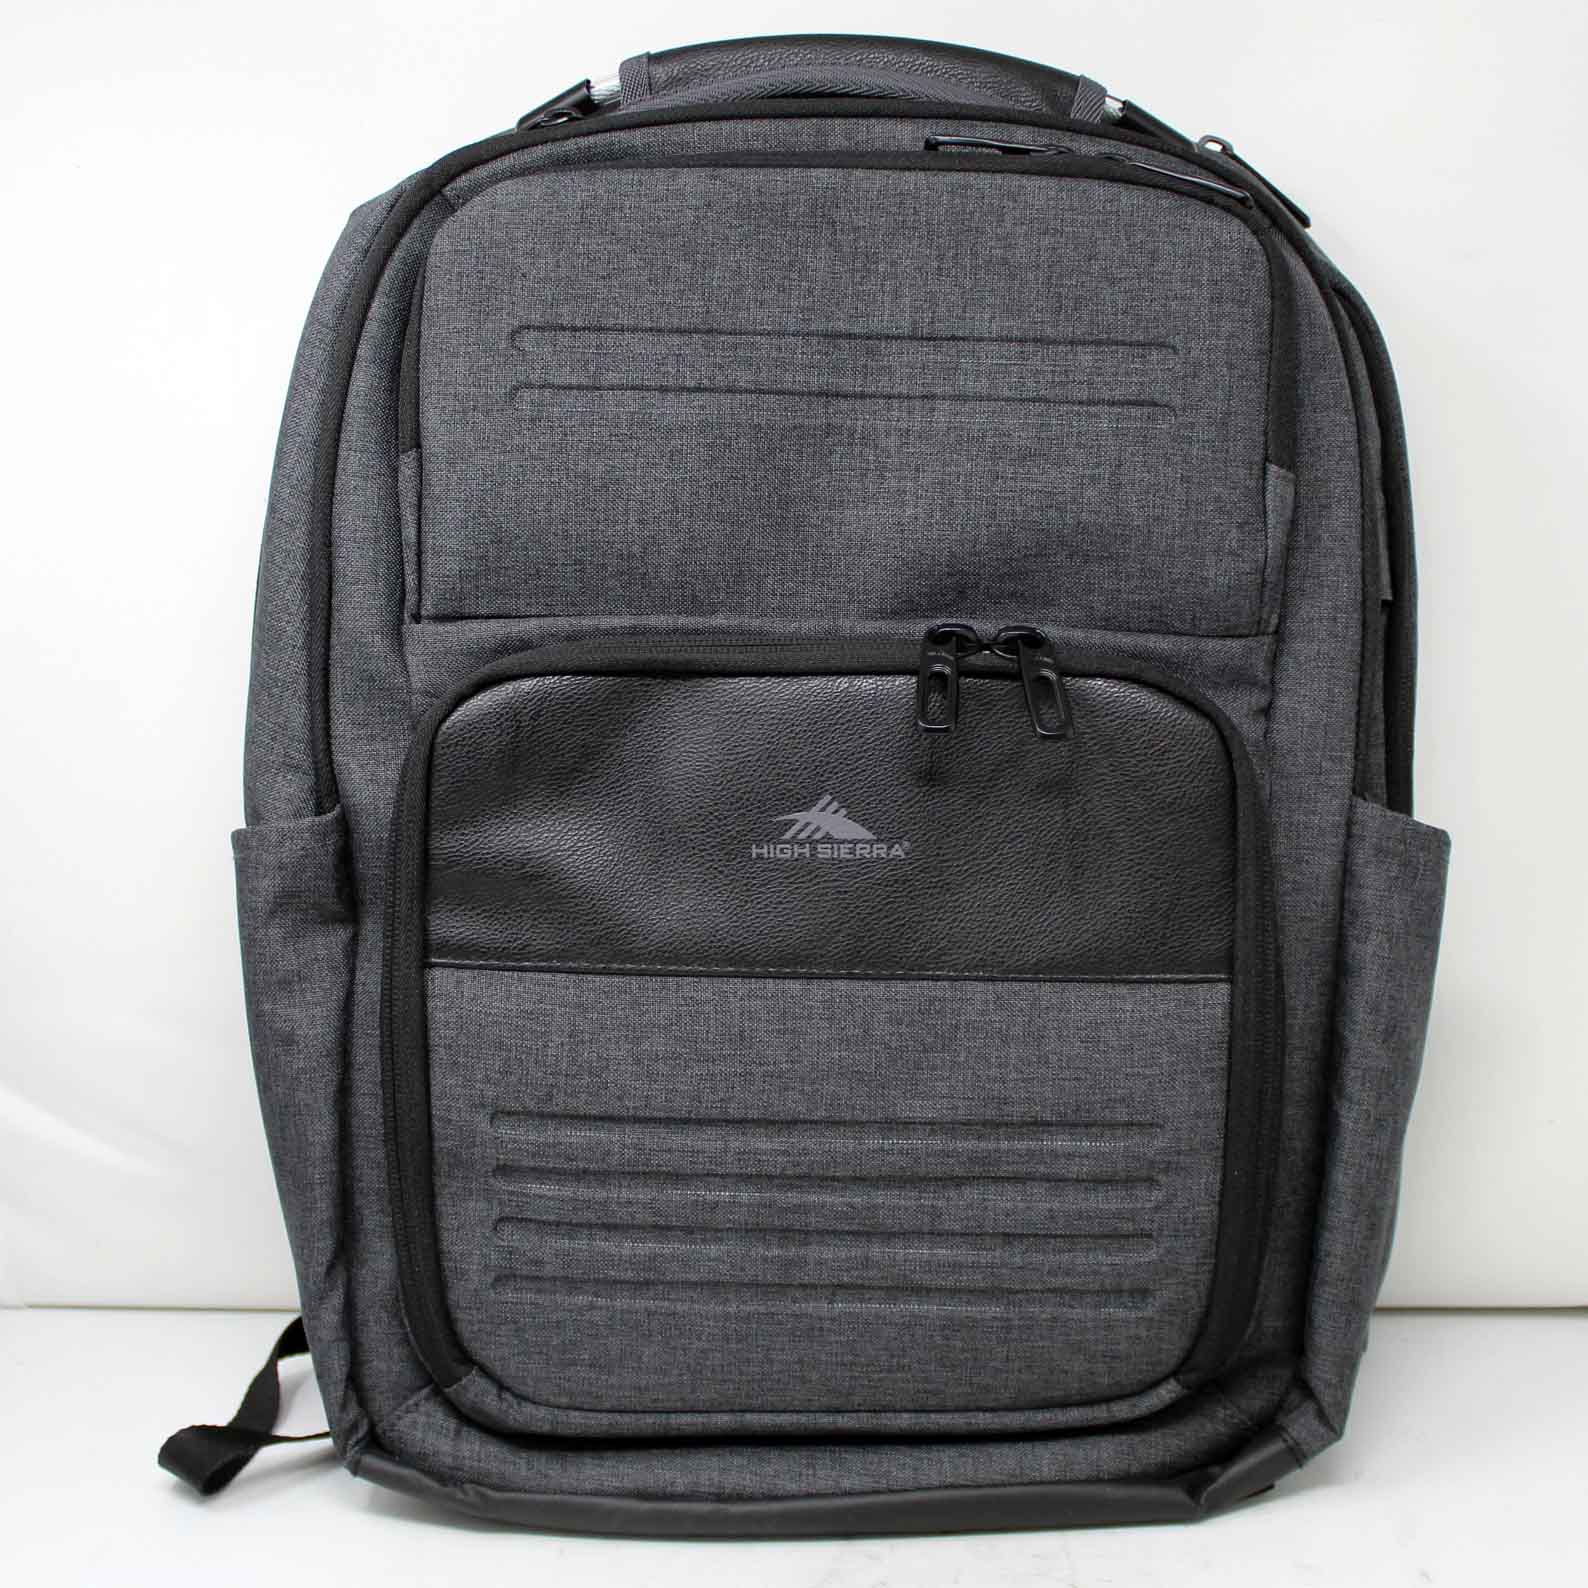 High Sierra Elite Pro Business Backpack Grey 1 Count - image 1 of 3